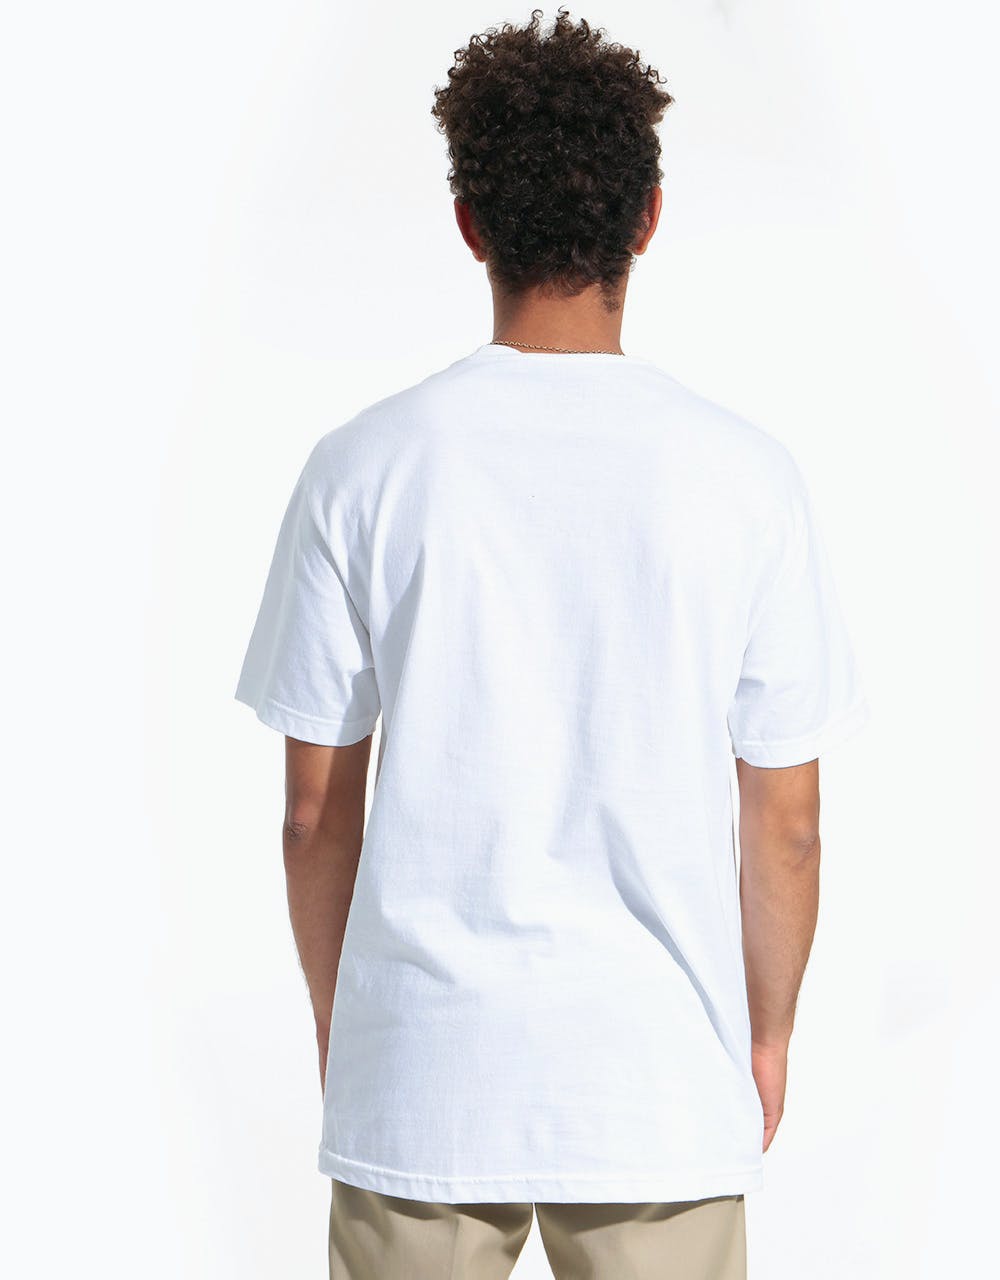 Pass Port Lavender T-Shirt - White